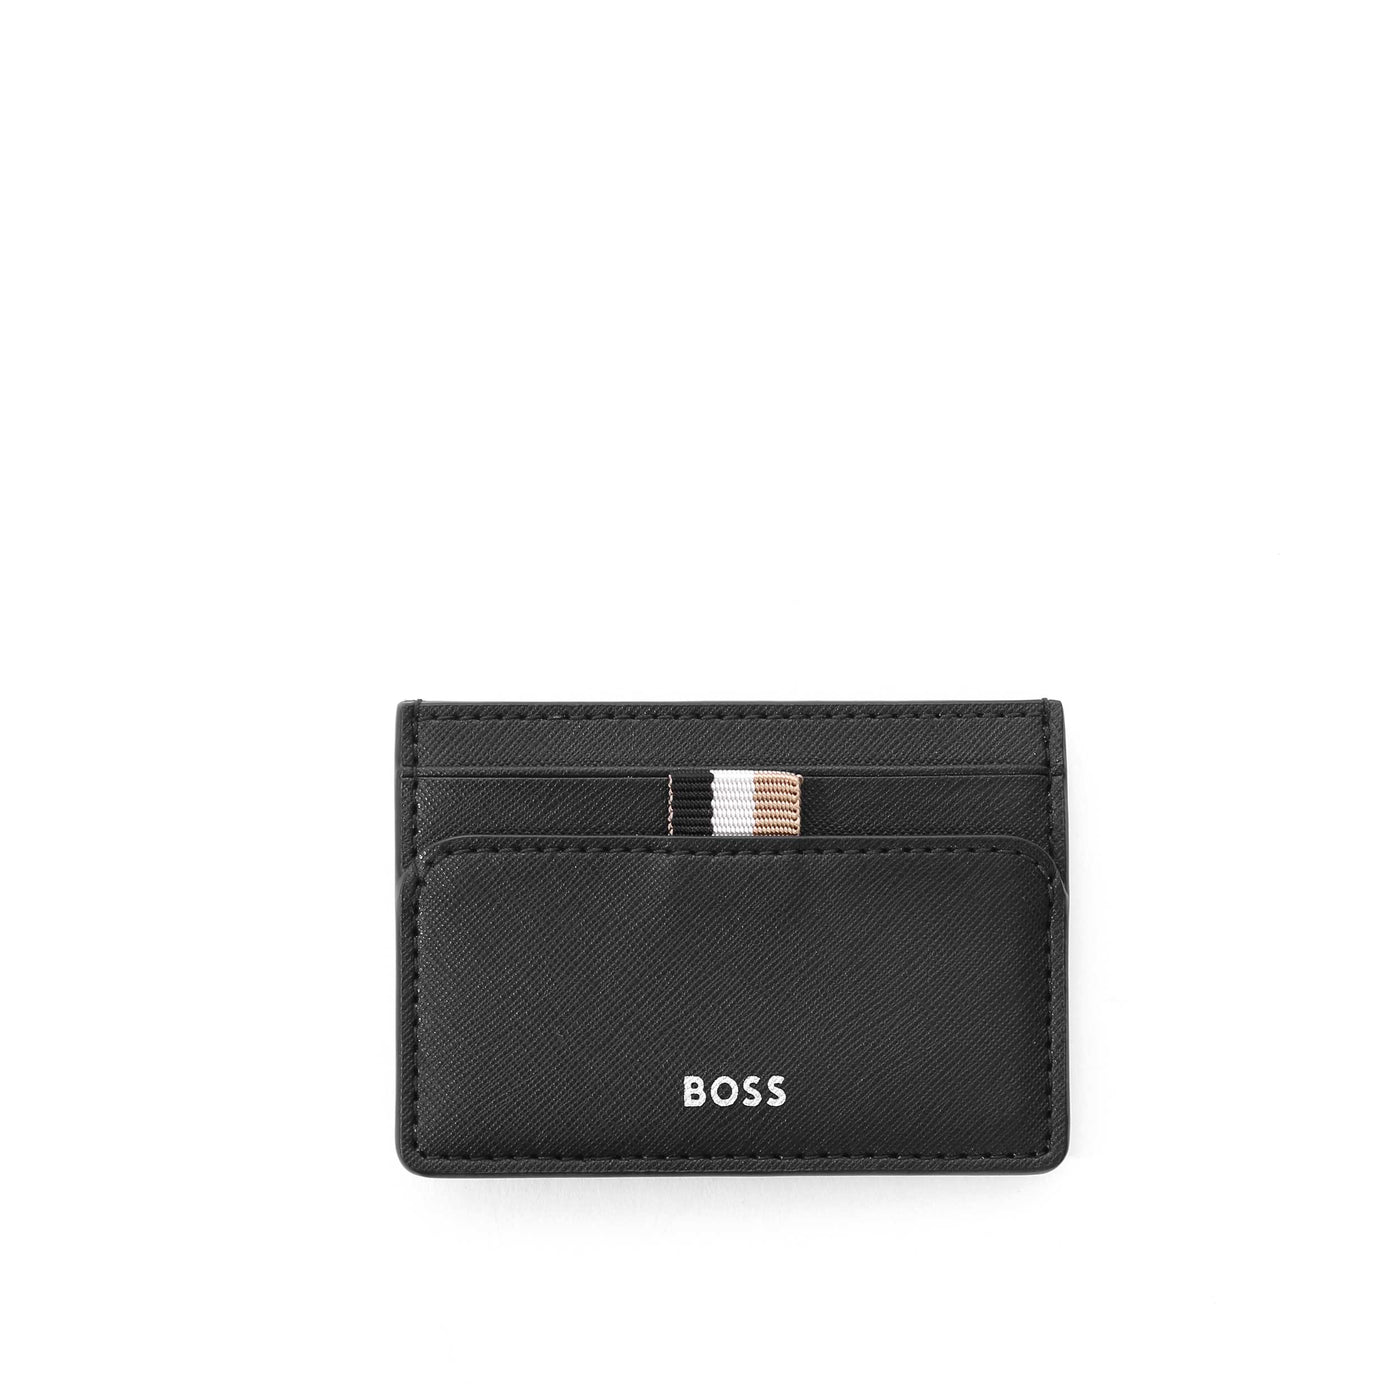 BOSS Zair Money Clip 1 Wallet in Black